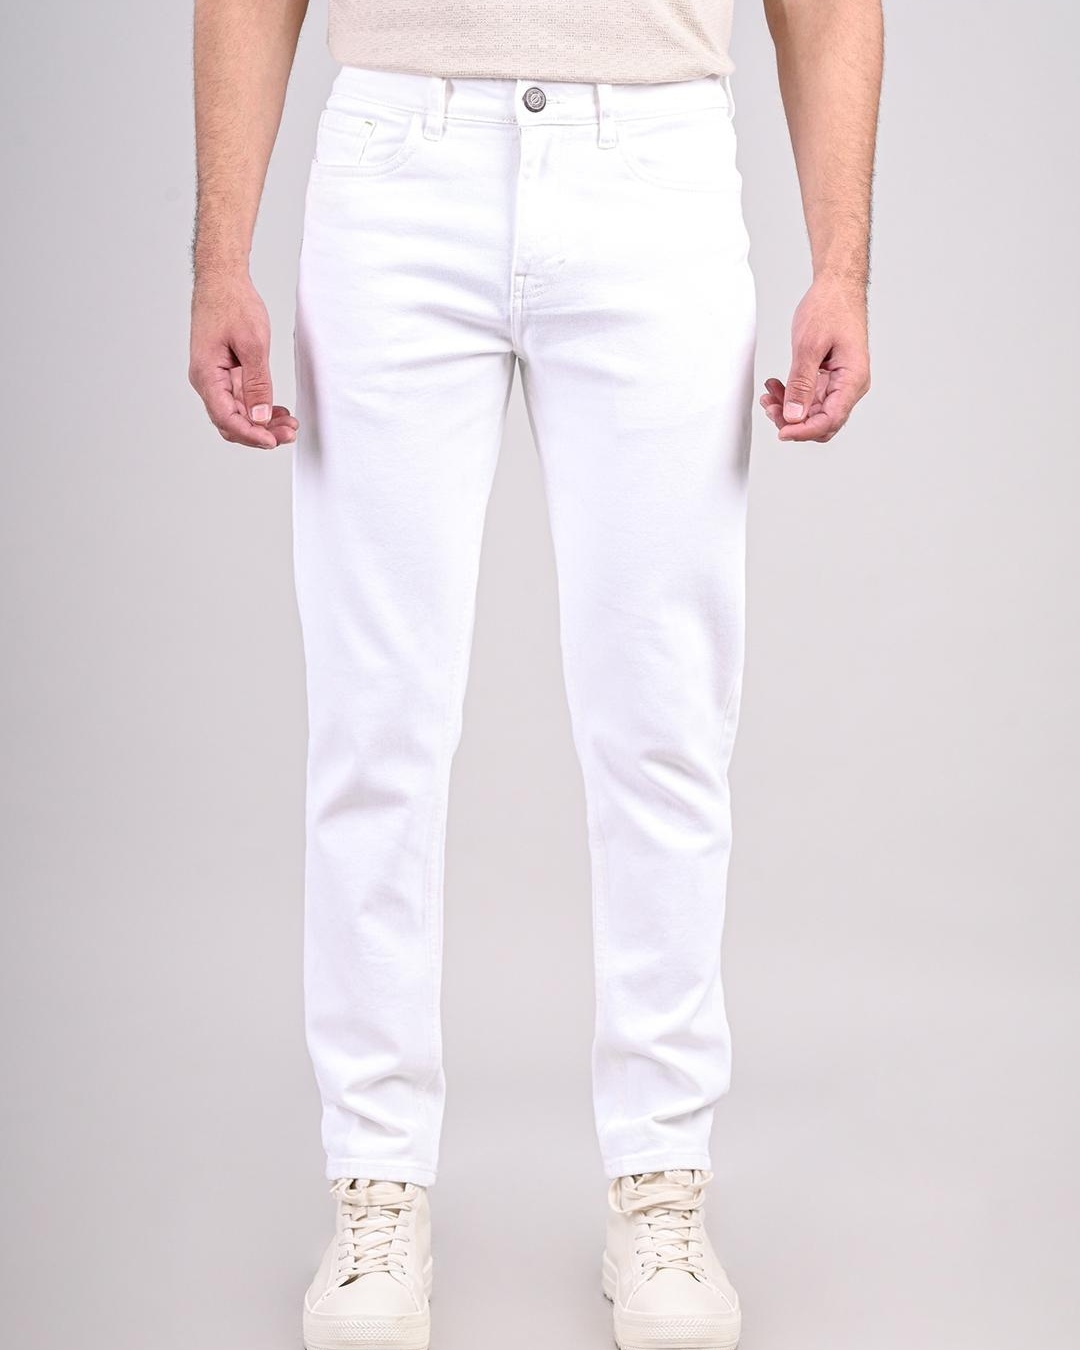 Buy Men's White Slim Fit Jeans Online at Bewakoof